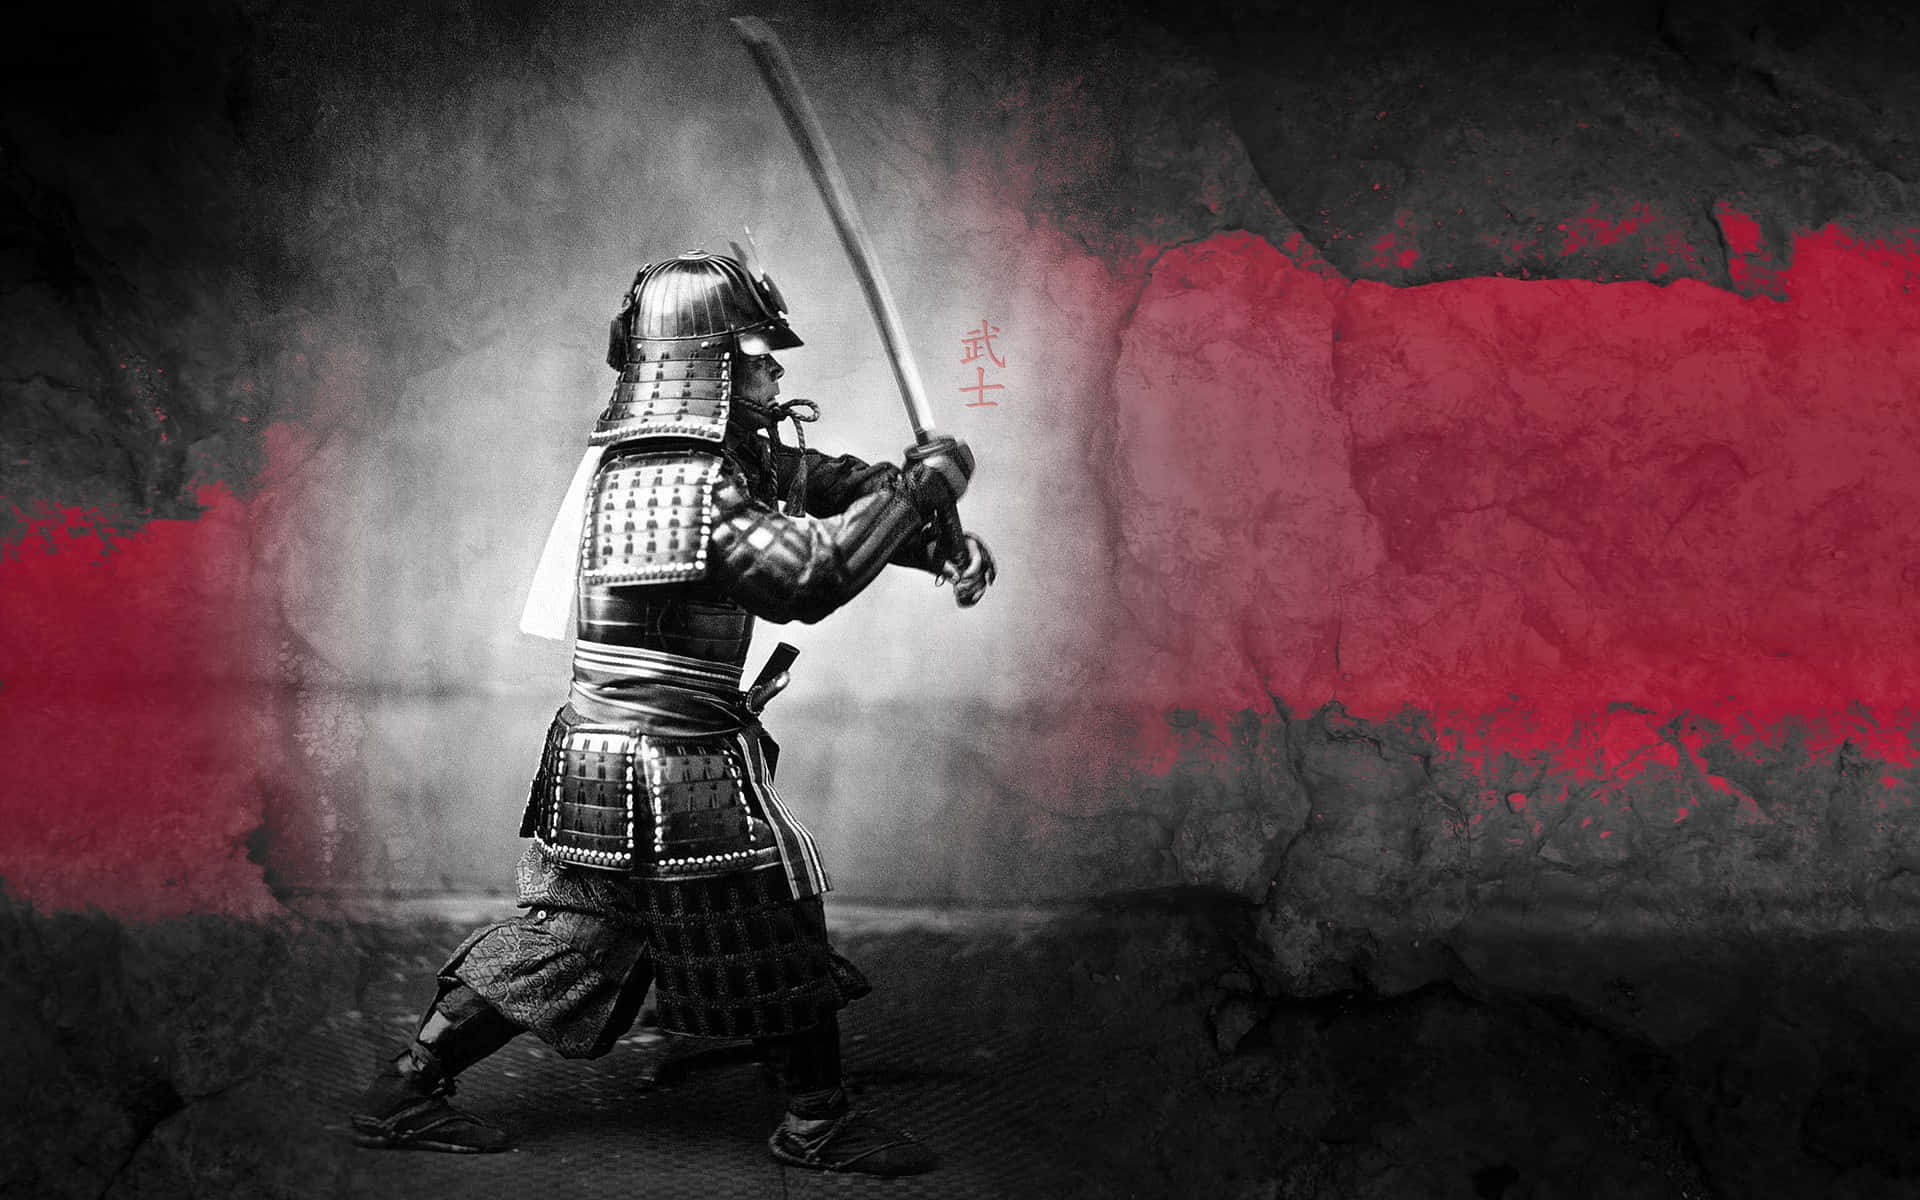 Samurai X Strikes a Powerful Pose